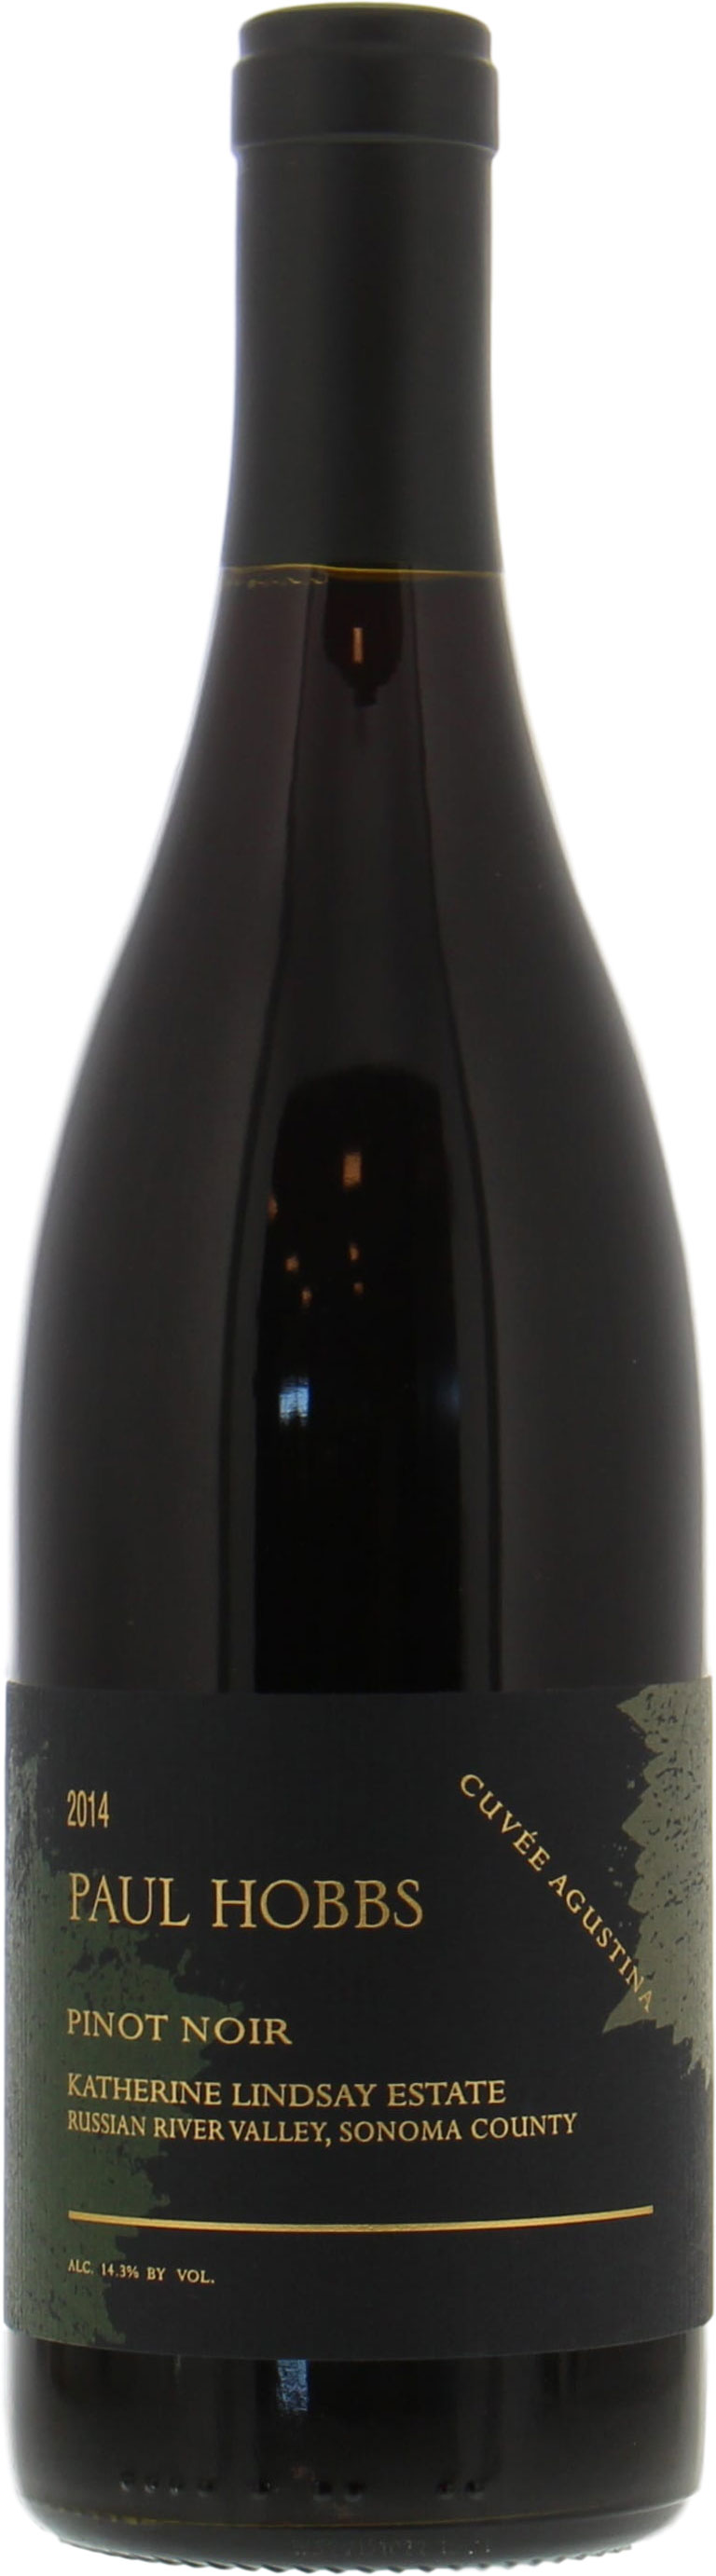 Paul Hobbs - Pinot Noir Cuvee Agustina Katherine Lindsay Estate Vineyard 2014 Perfect